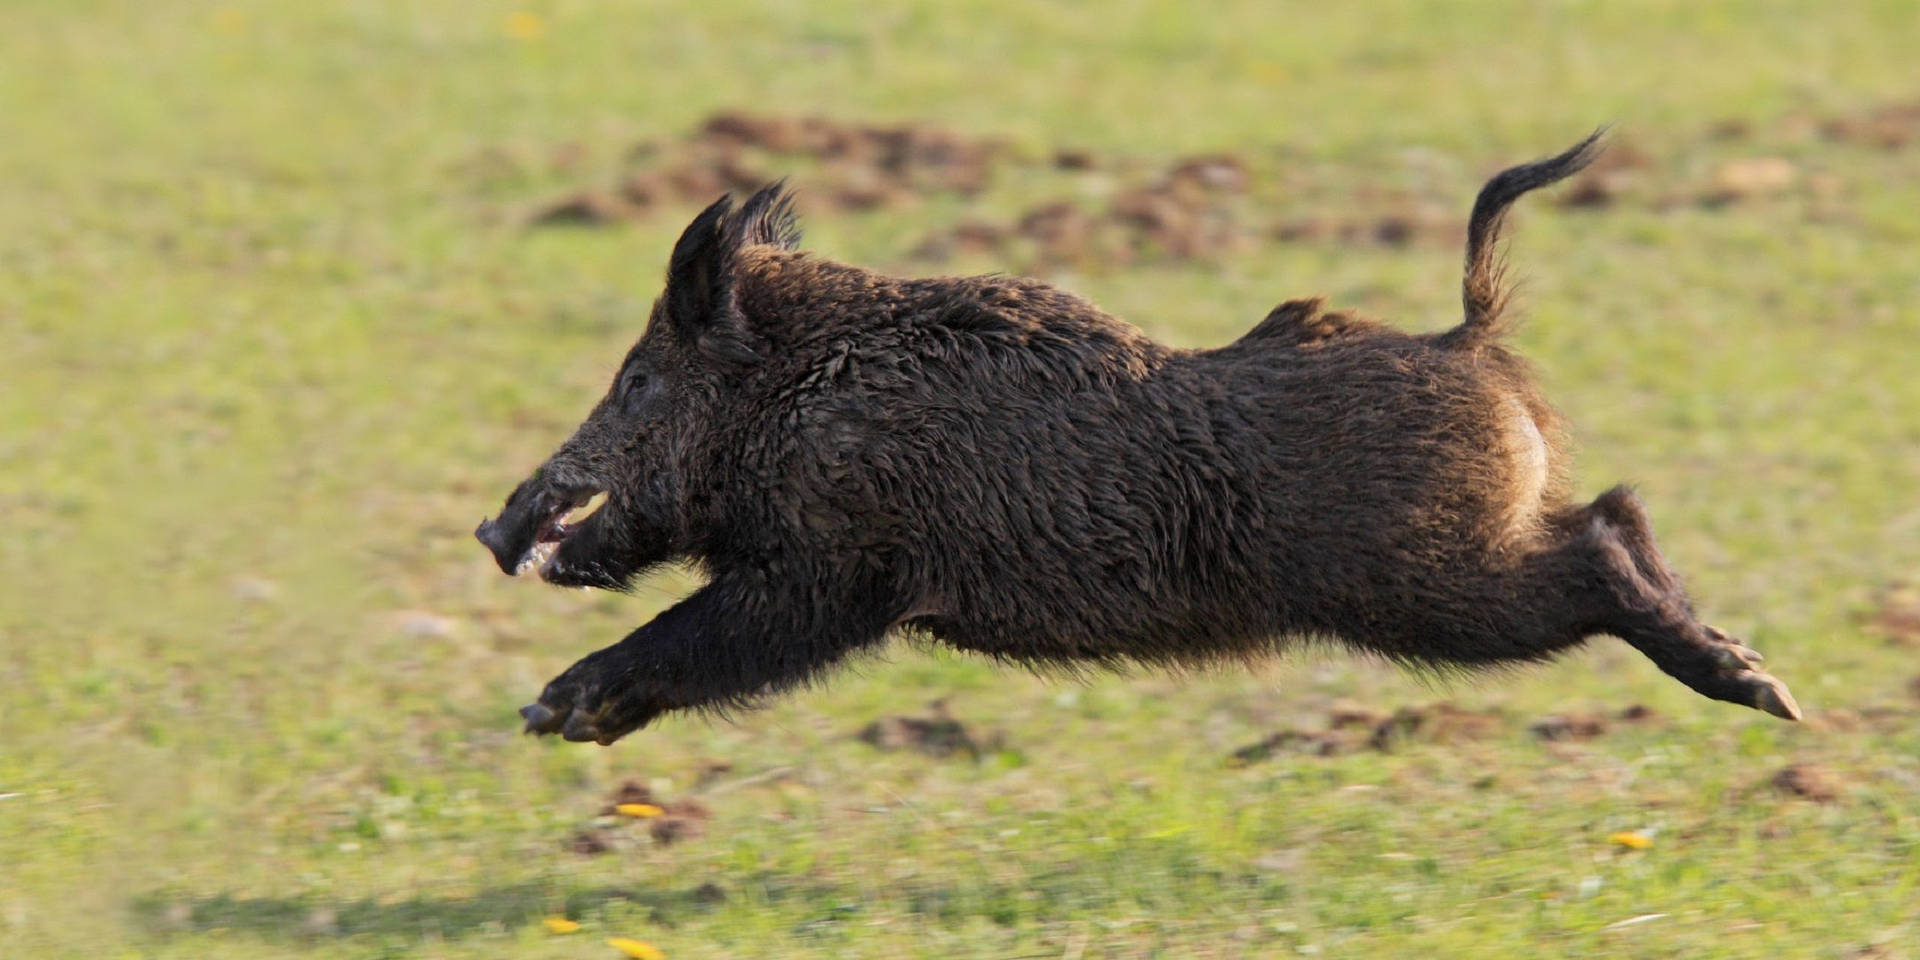 Jumping Wild Boar